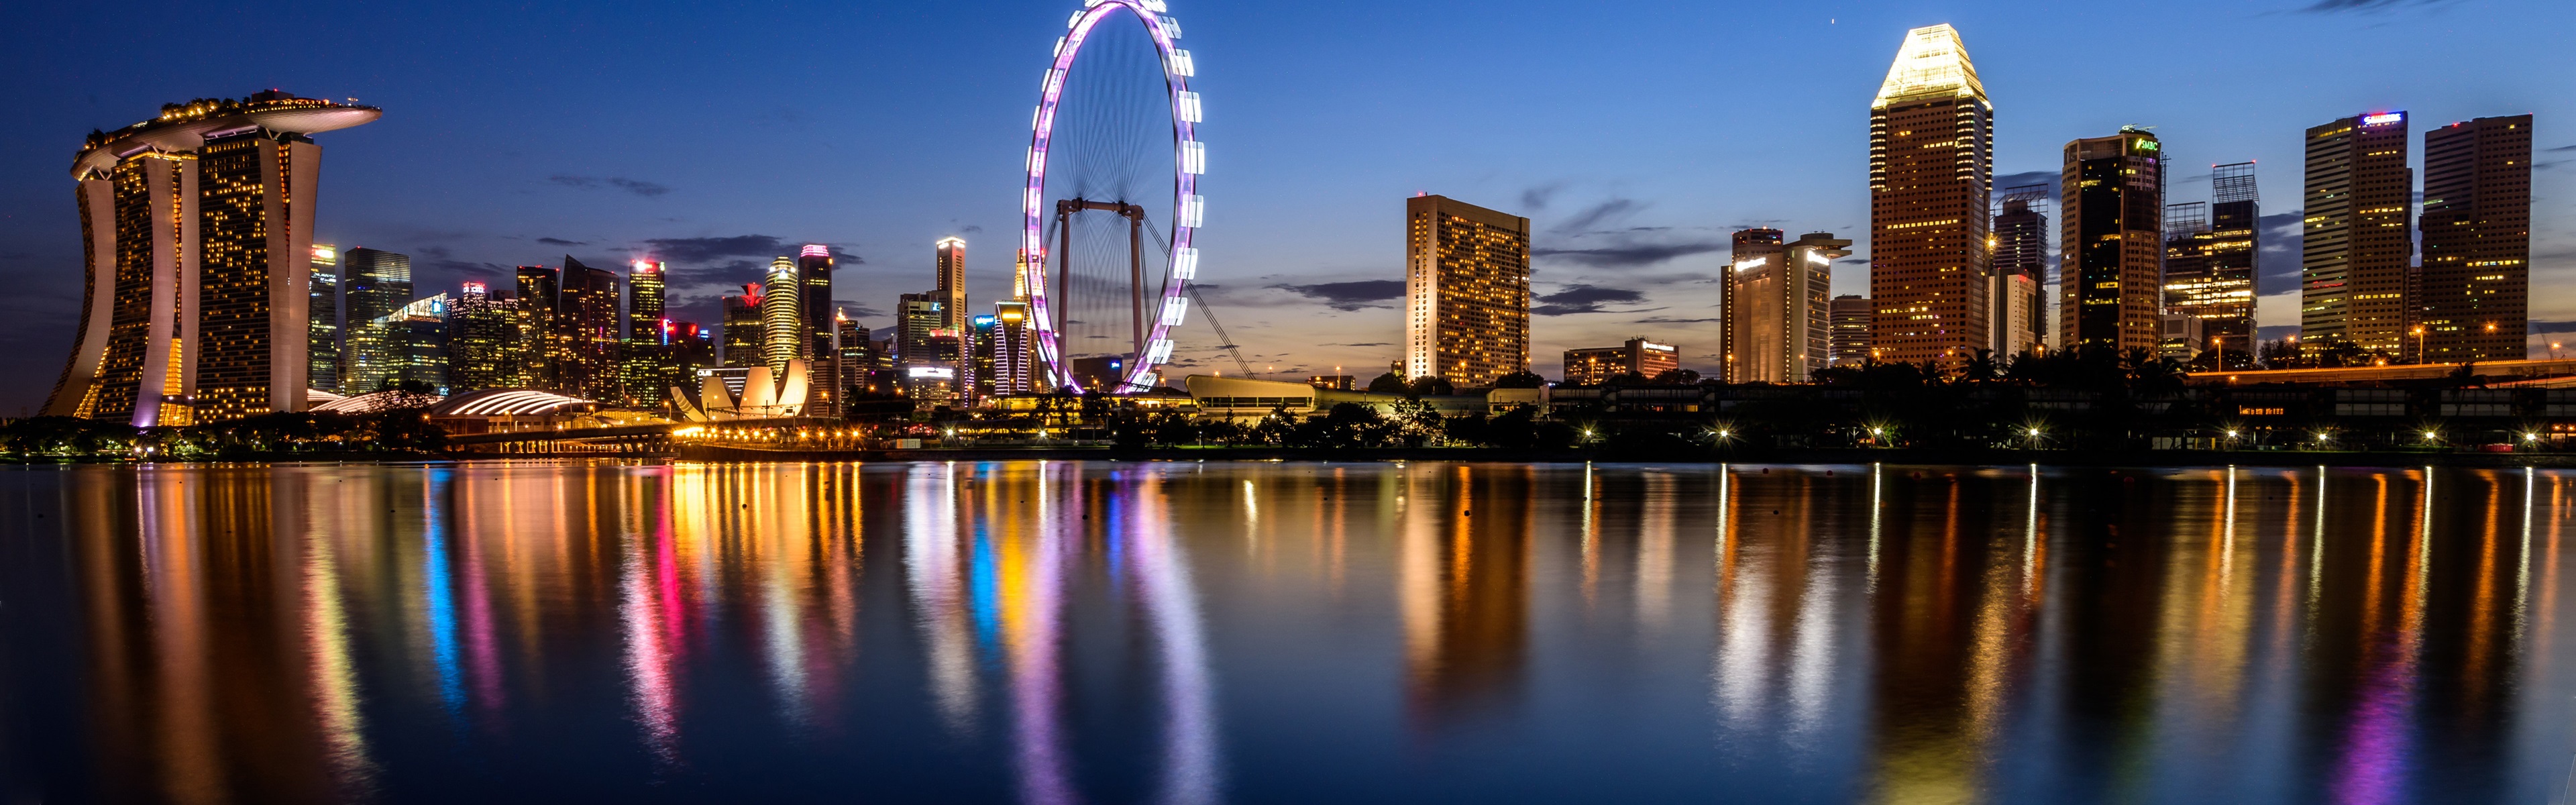 singapore town buildings night sea reflection lights ferris